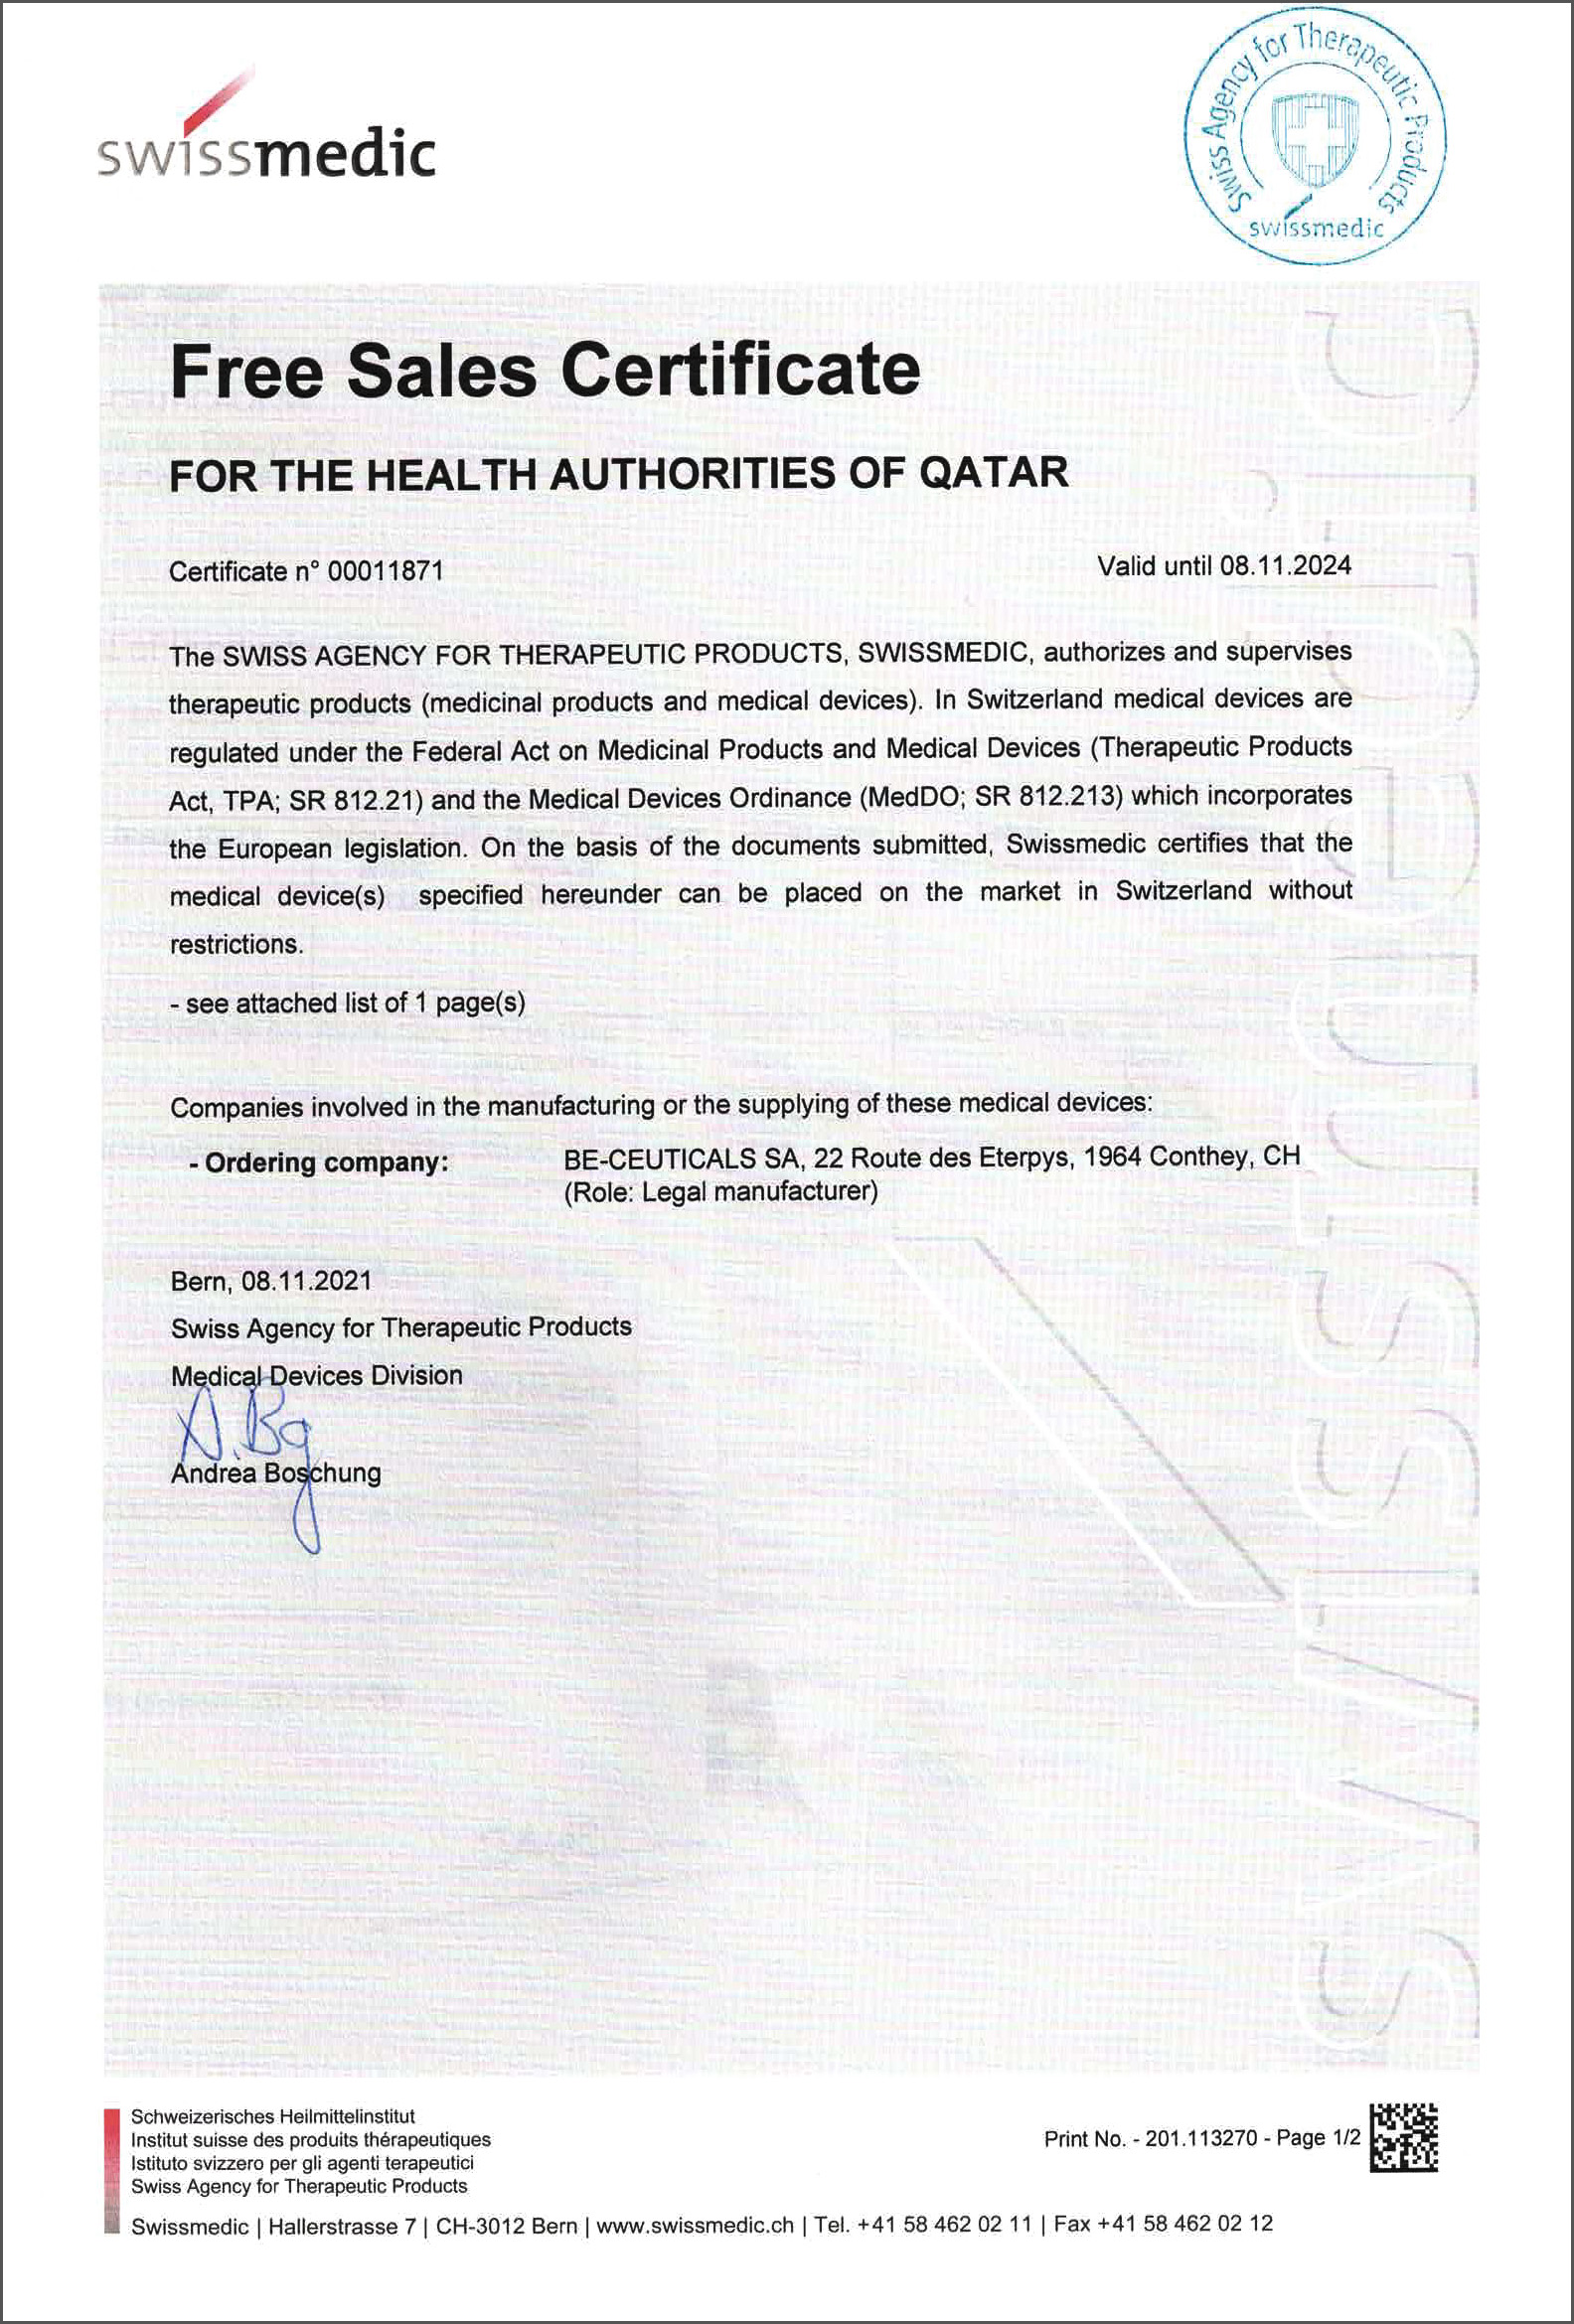 Swissmedic - Free Sales Certificate - Qatar